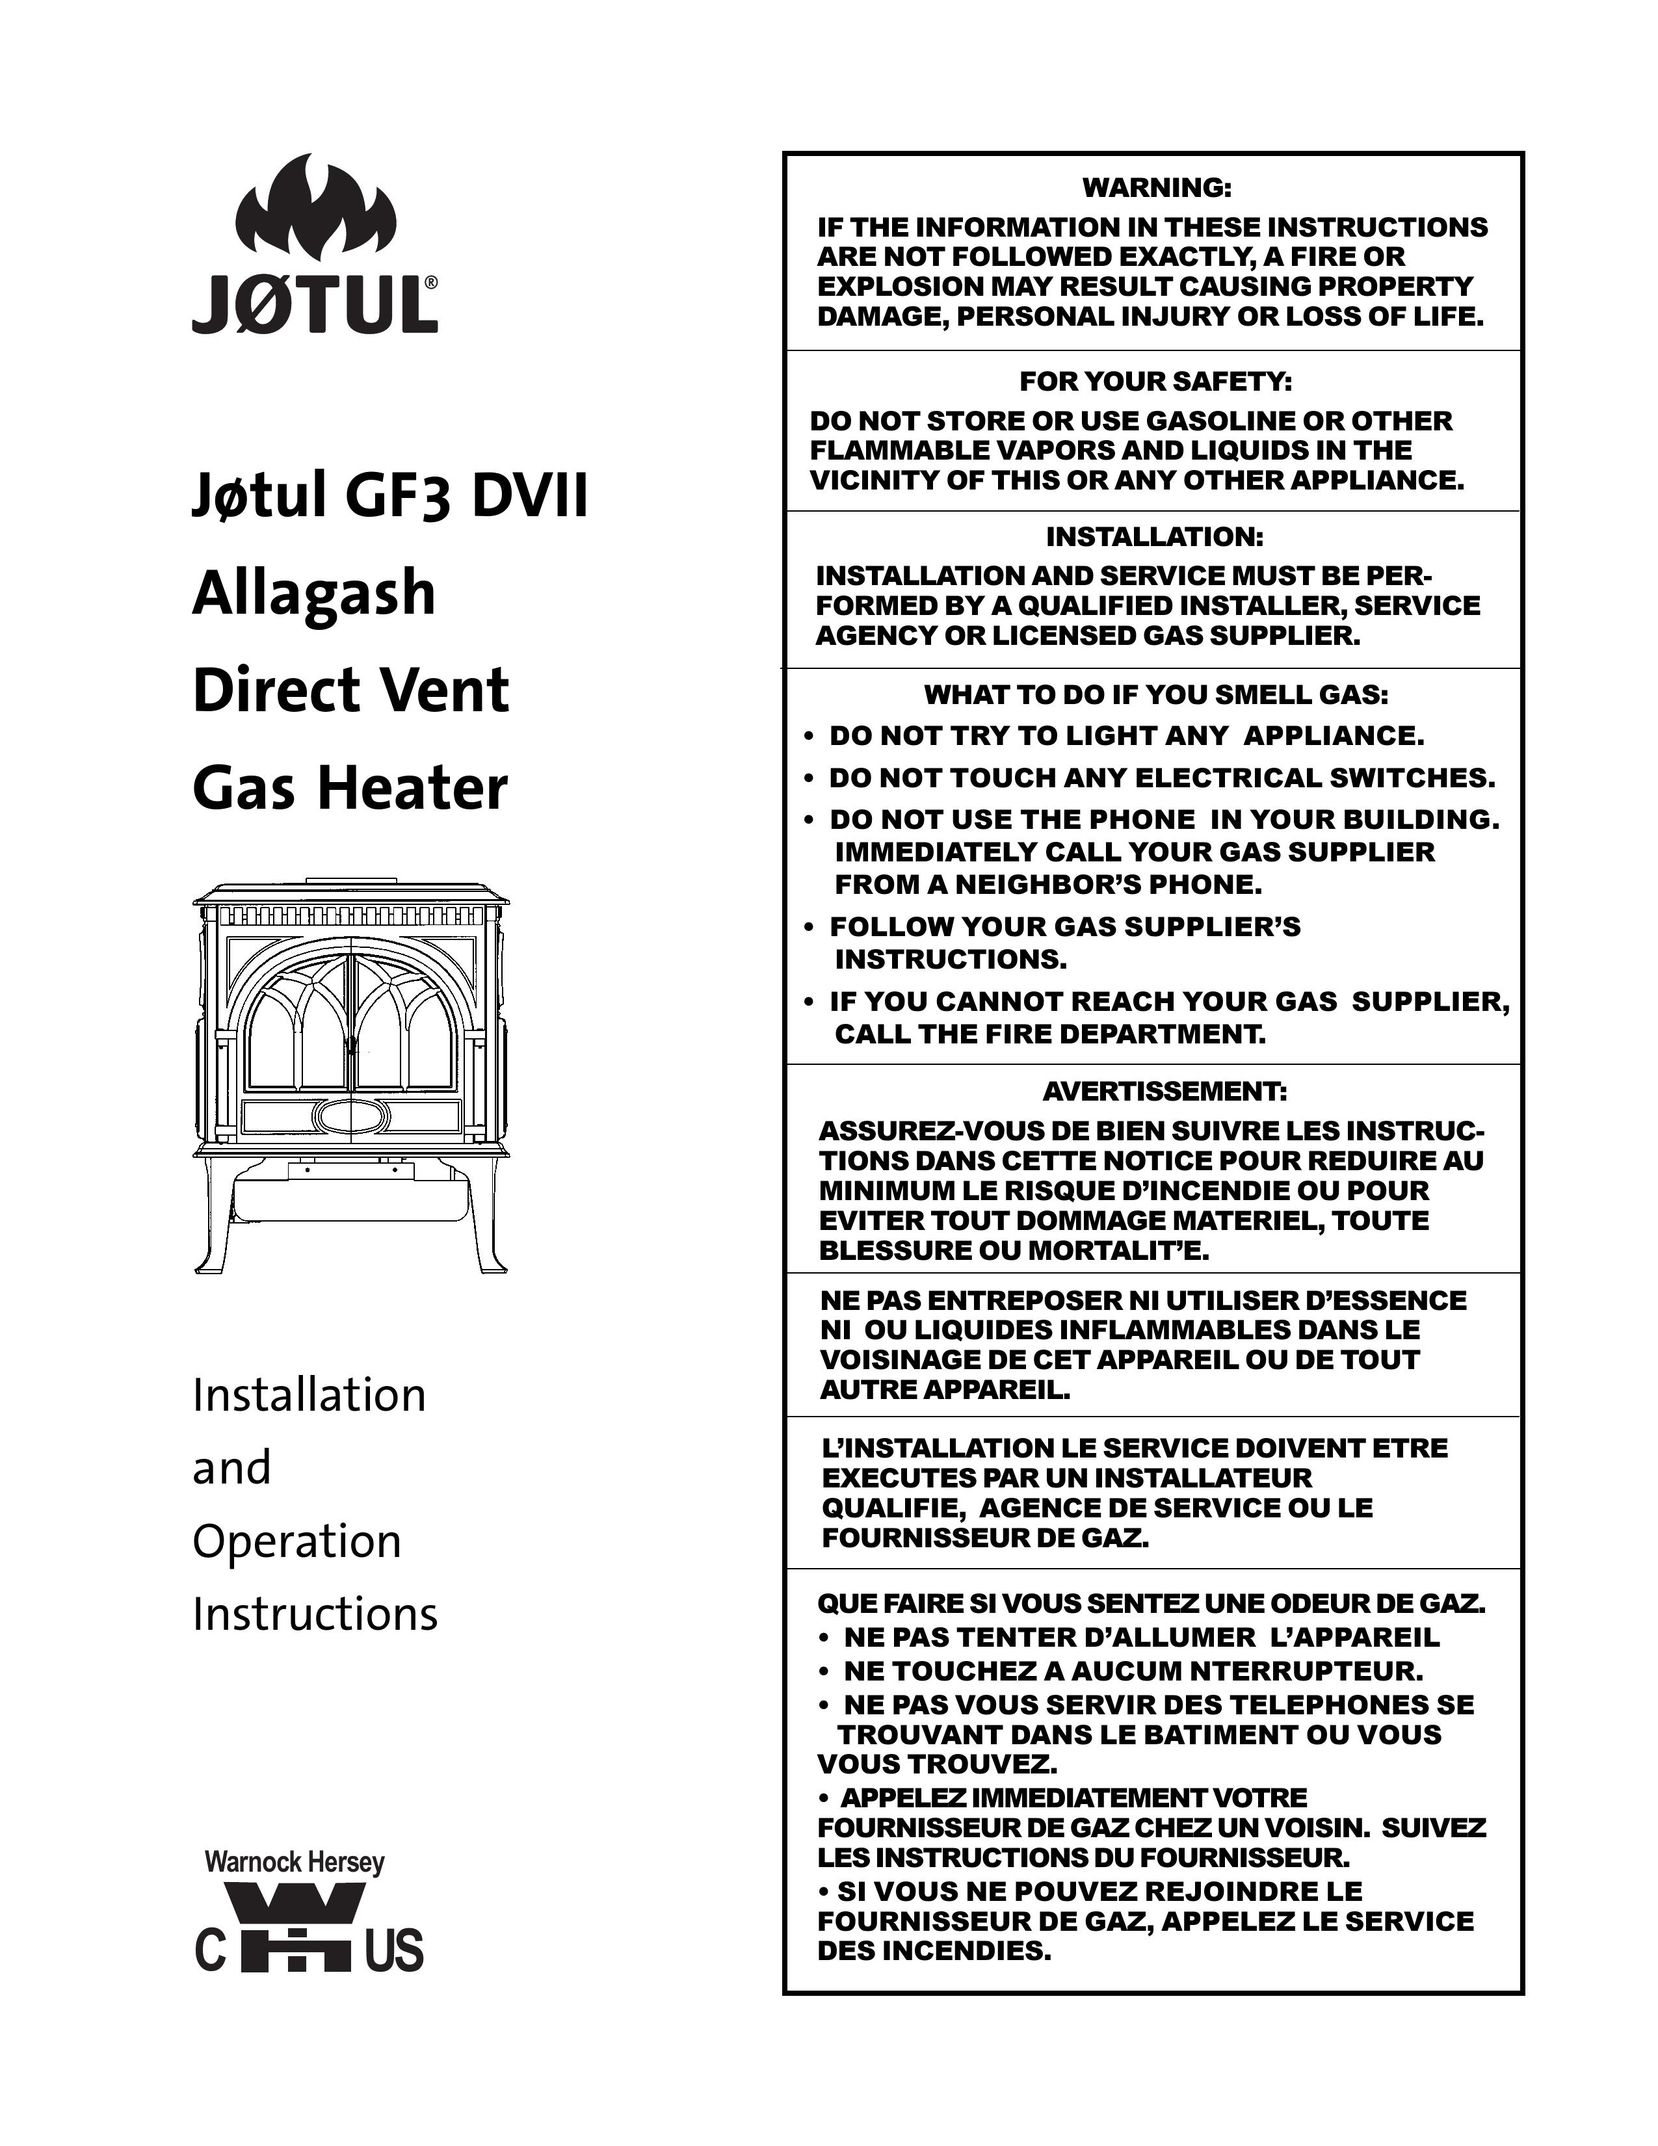 Jotul GF3 DVII Stove User Manual